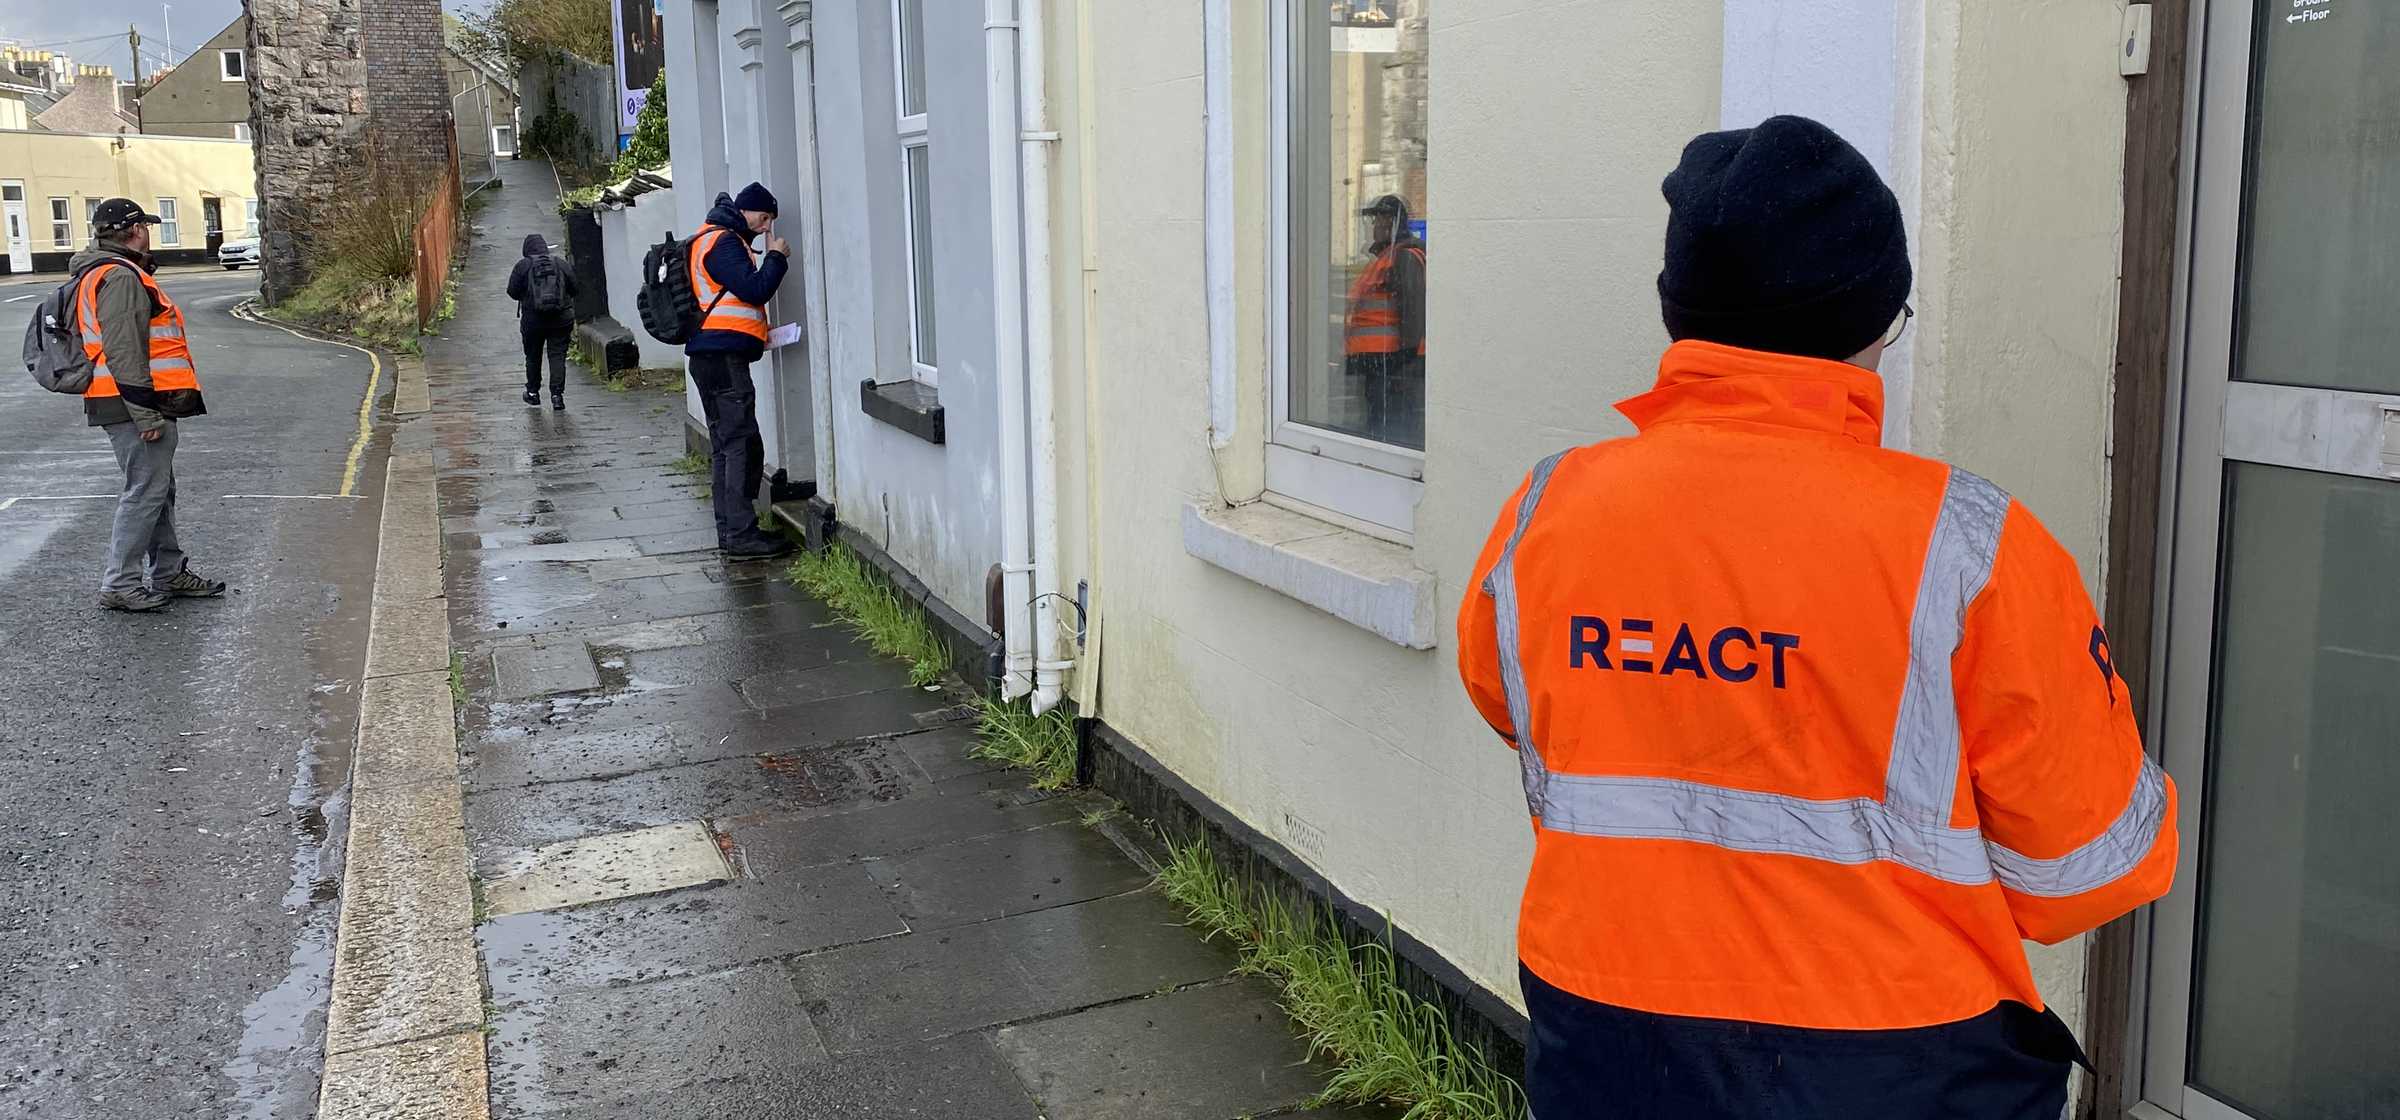 REACT team knocking doors in Orange evacuation zone 230224.jpg